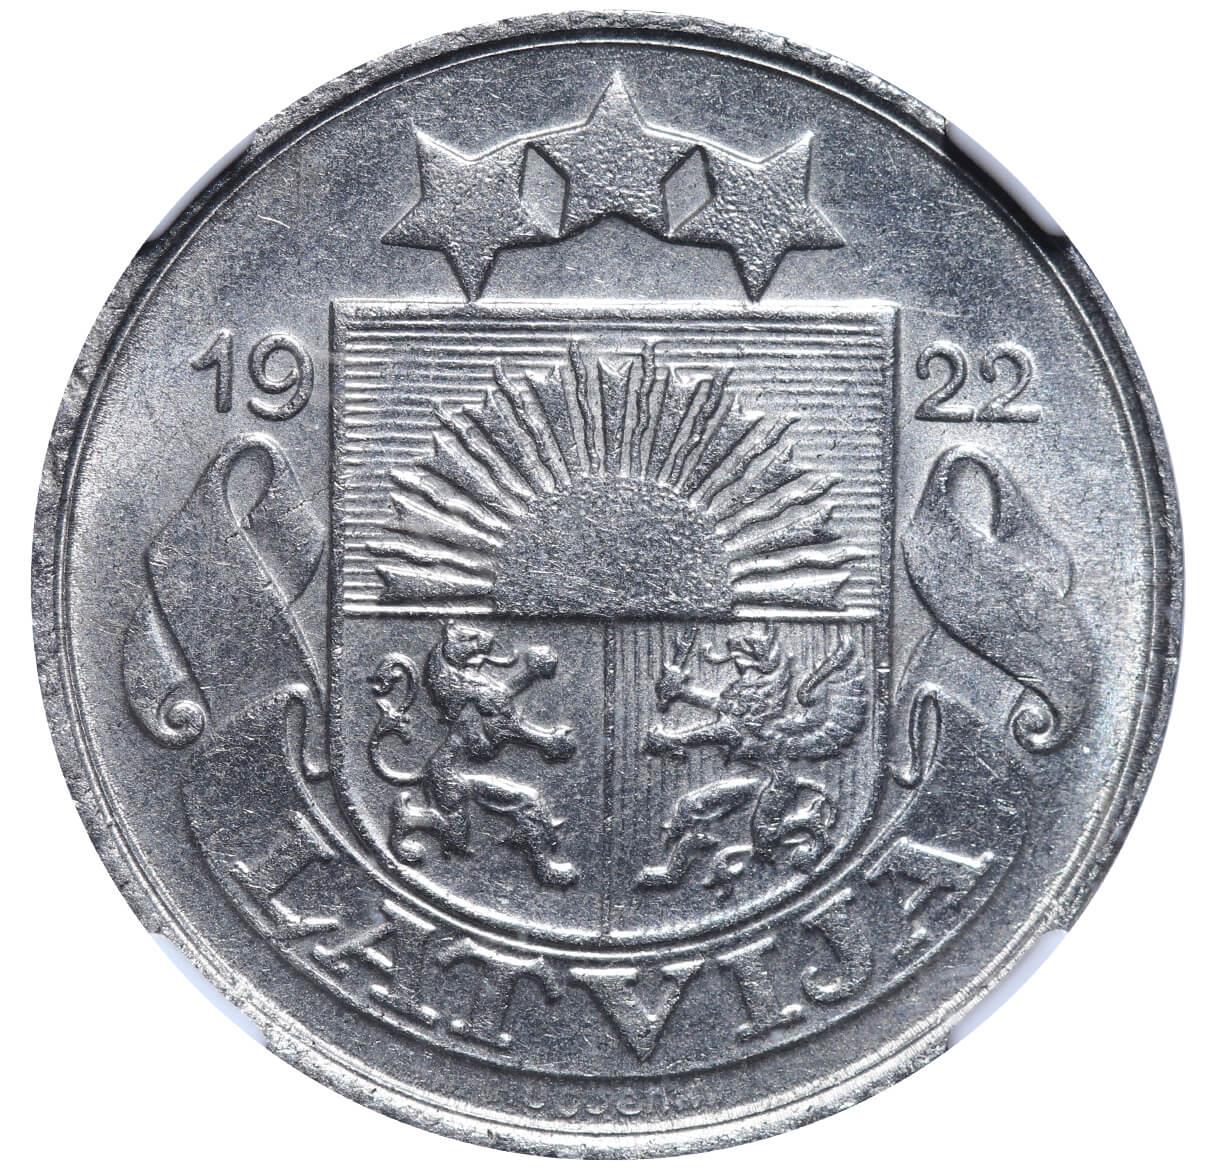 Latvia, 10 Santimu, 1922 year, NGC, MS 65 - Image 2 of 3